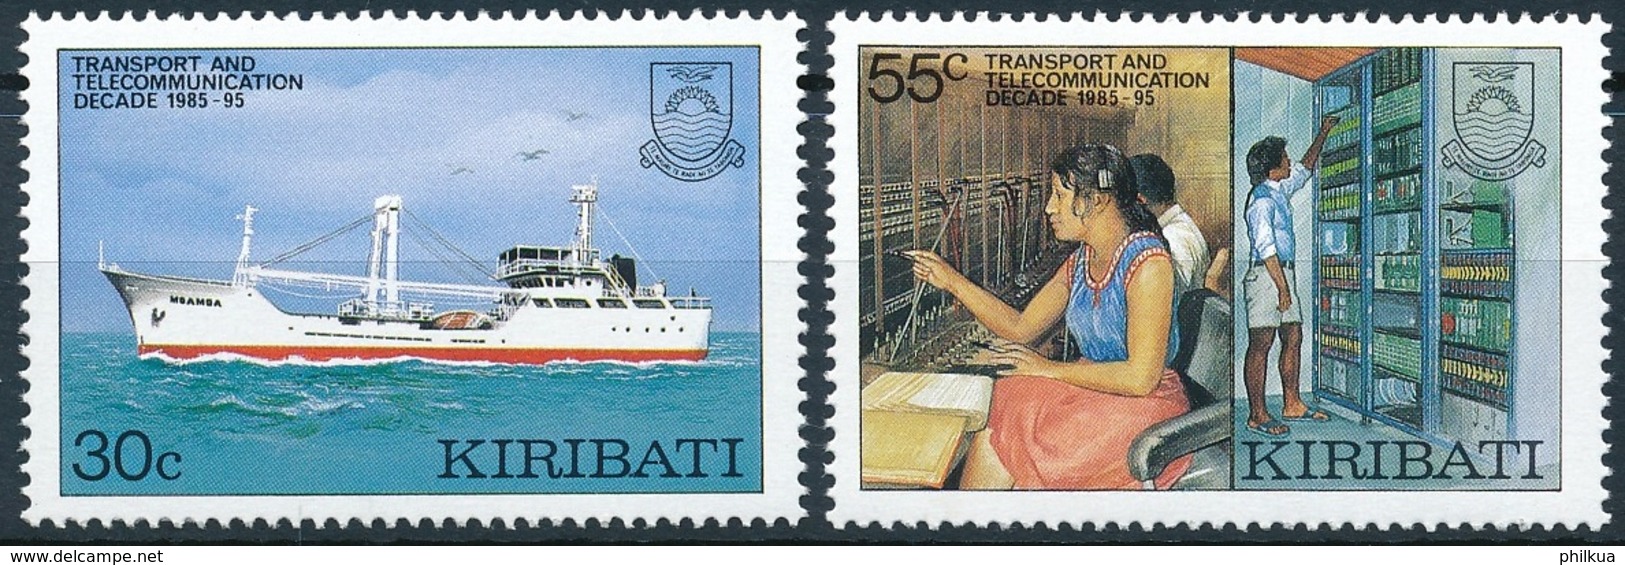 Kiribati - Postfrisch/** - Schiffe, Seefahrt, Segelschiffe, Etc. / Ships, Seafaring, Sailing Ships - Maritime